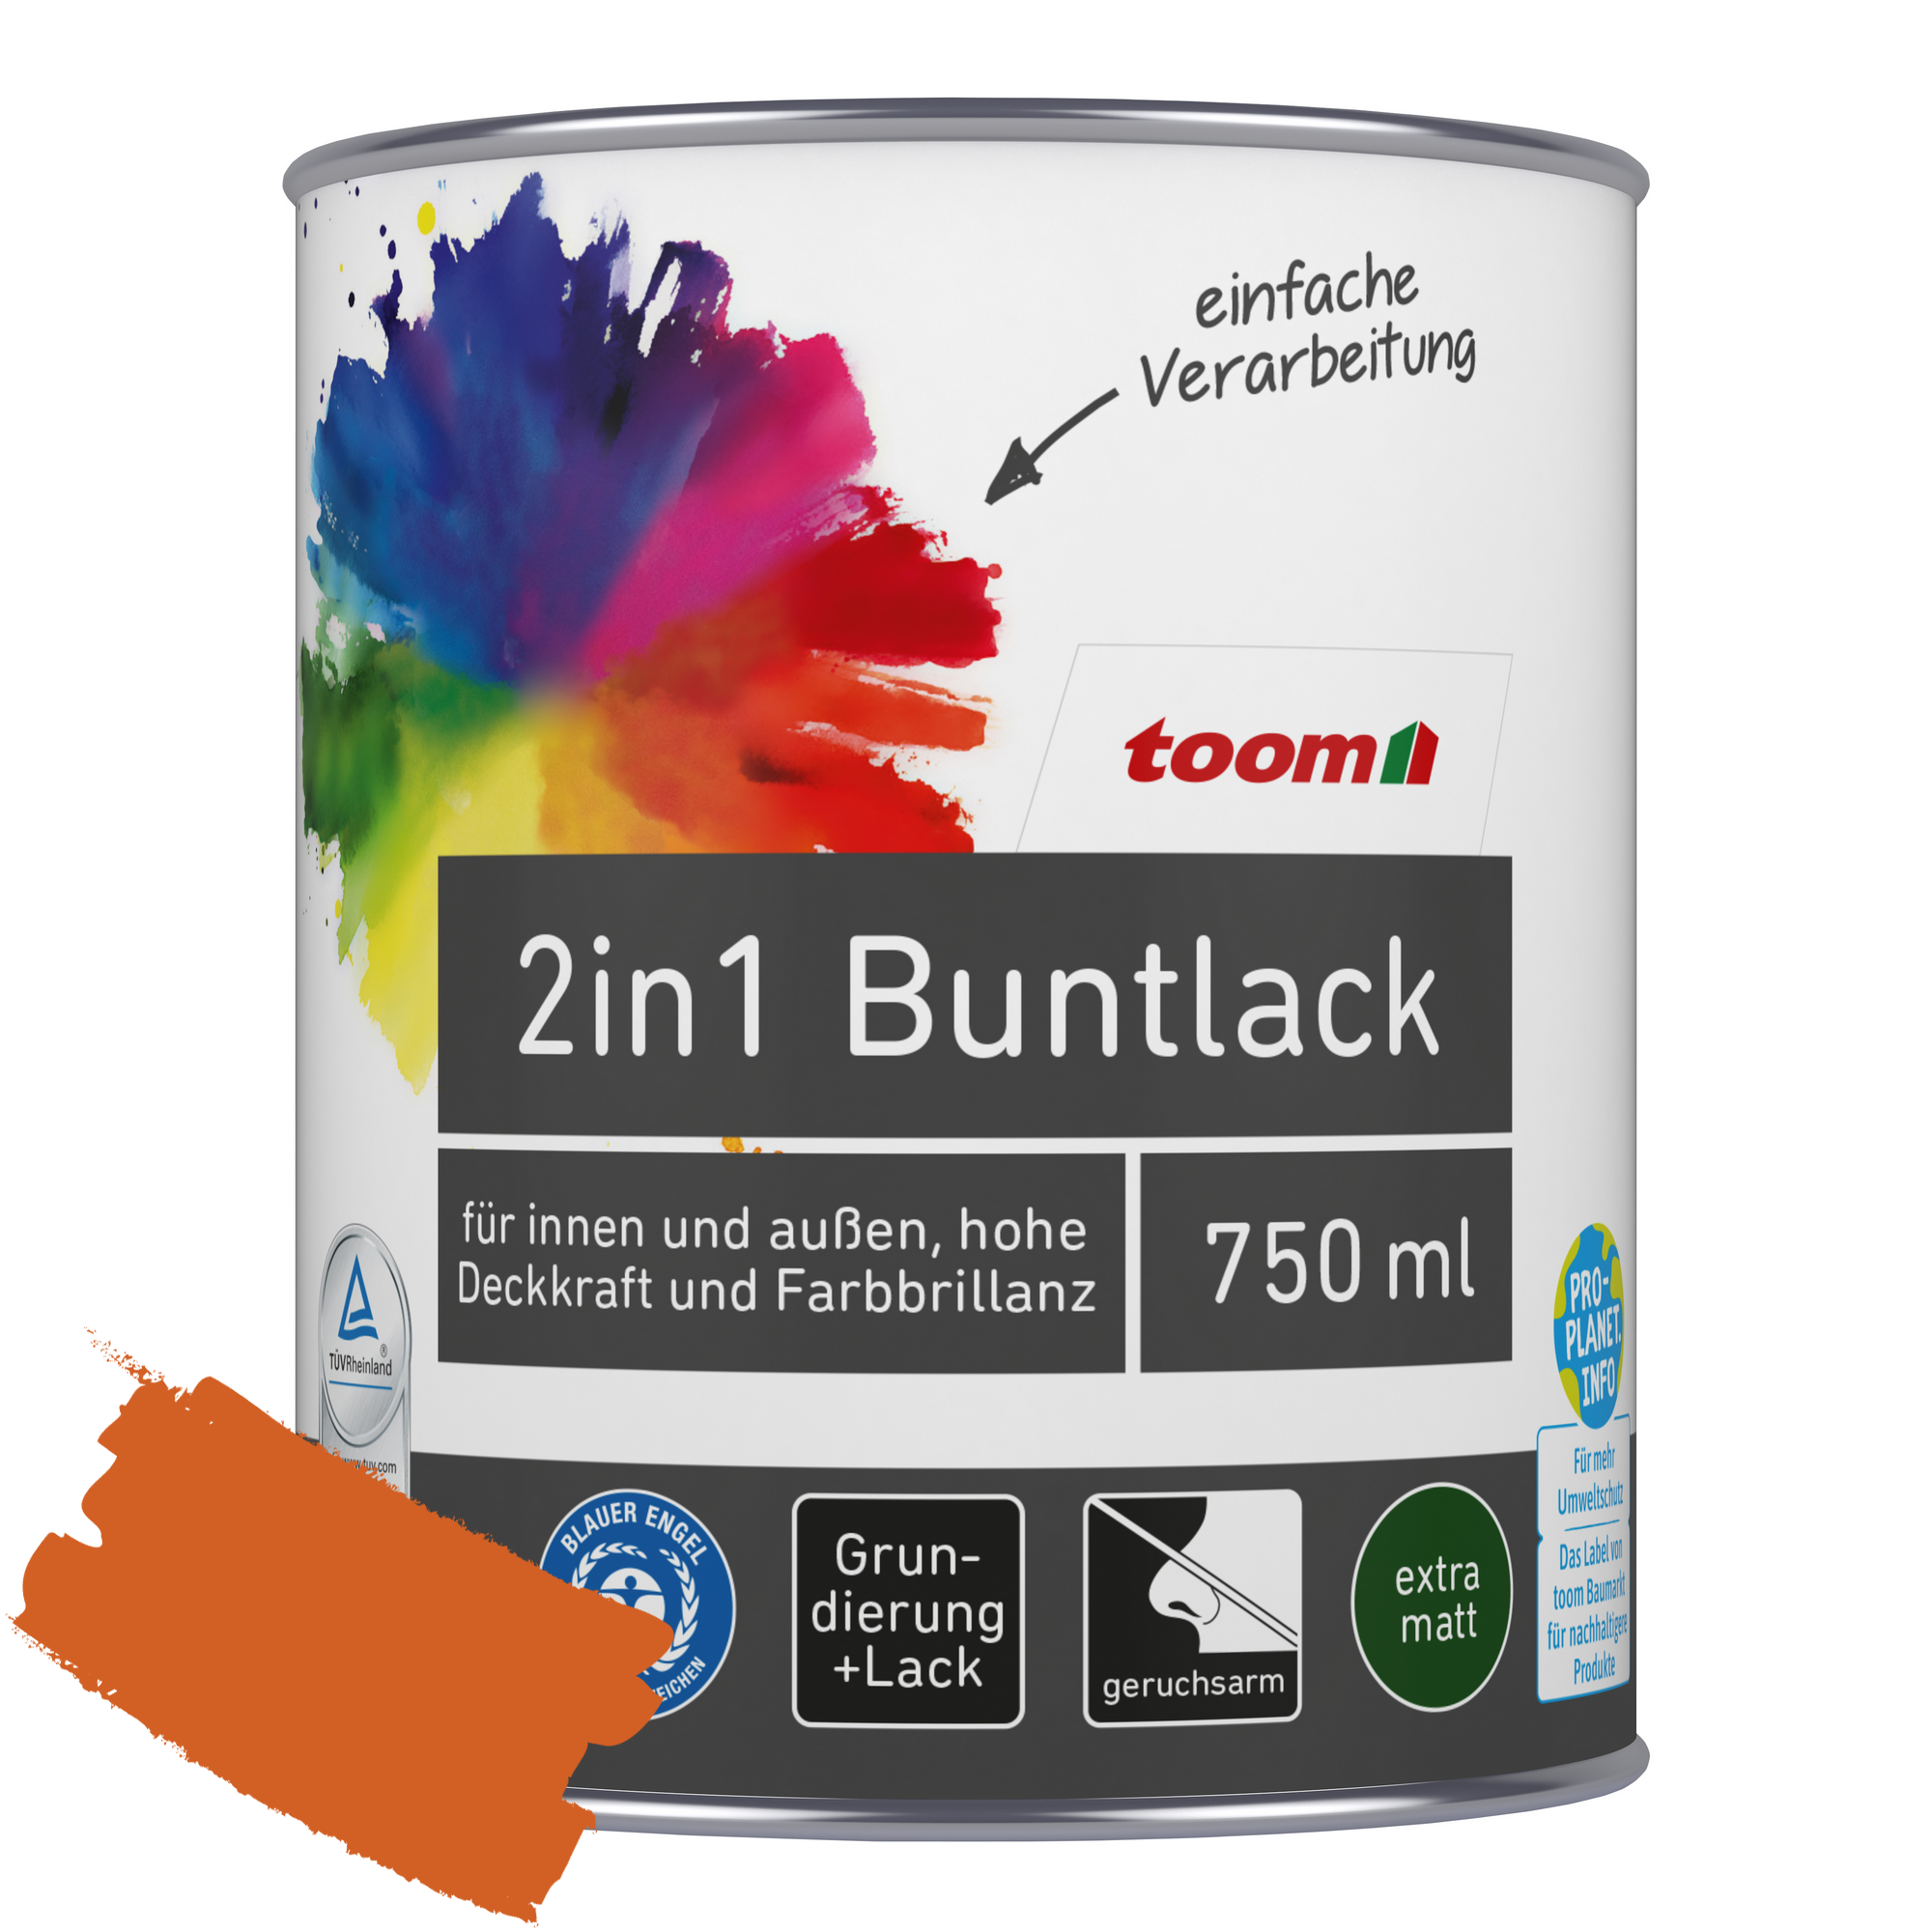 2in1 Buntlack 'Feuerglut' orange matt 750 ml + product picture